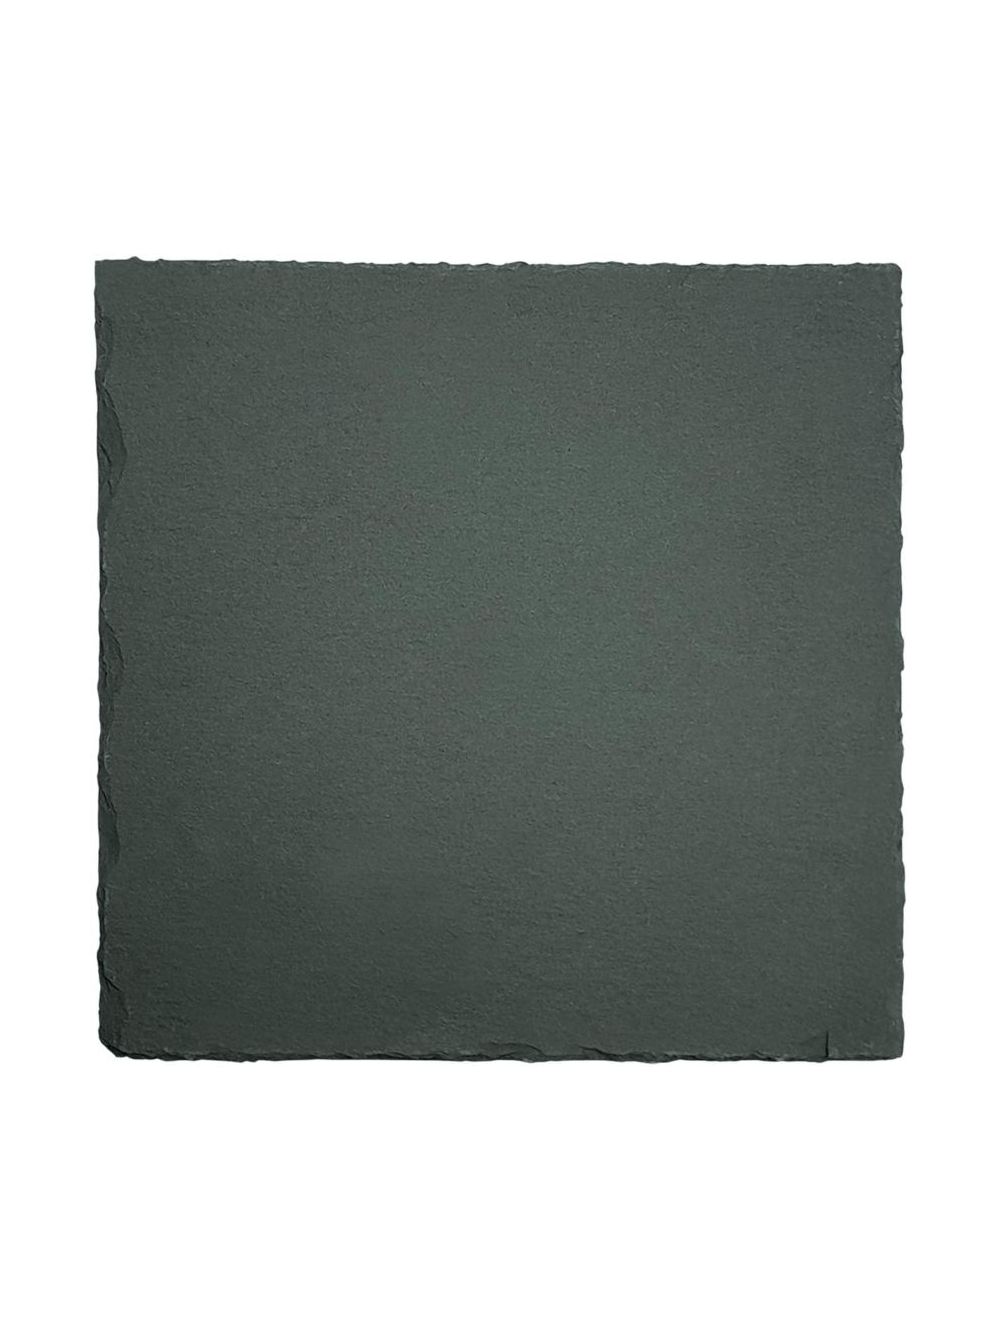 Kitchen Master-SL0002, Square Slate Plate 25x25 cm, Black